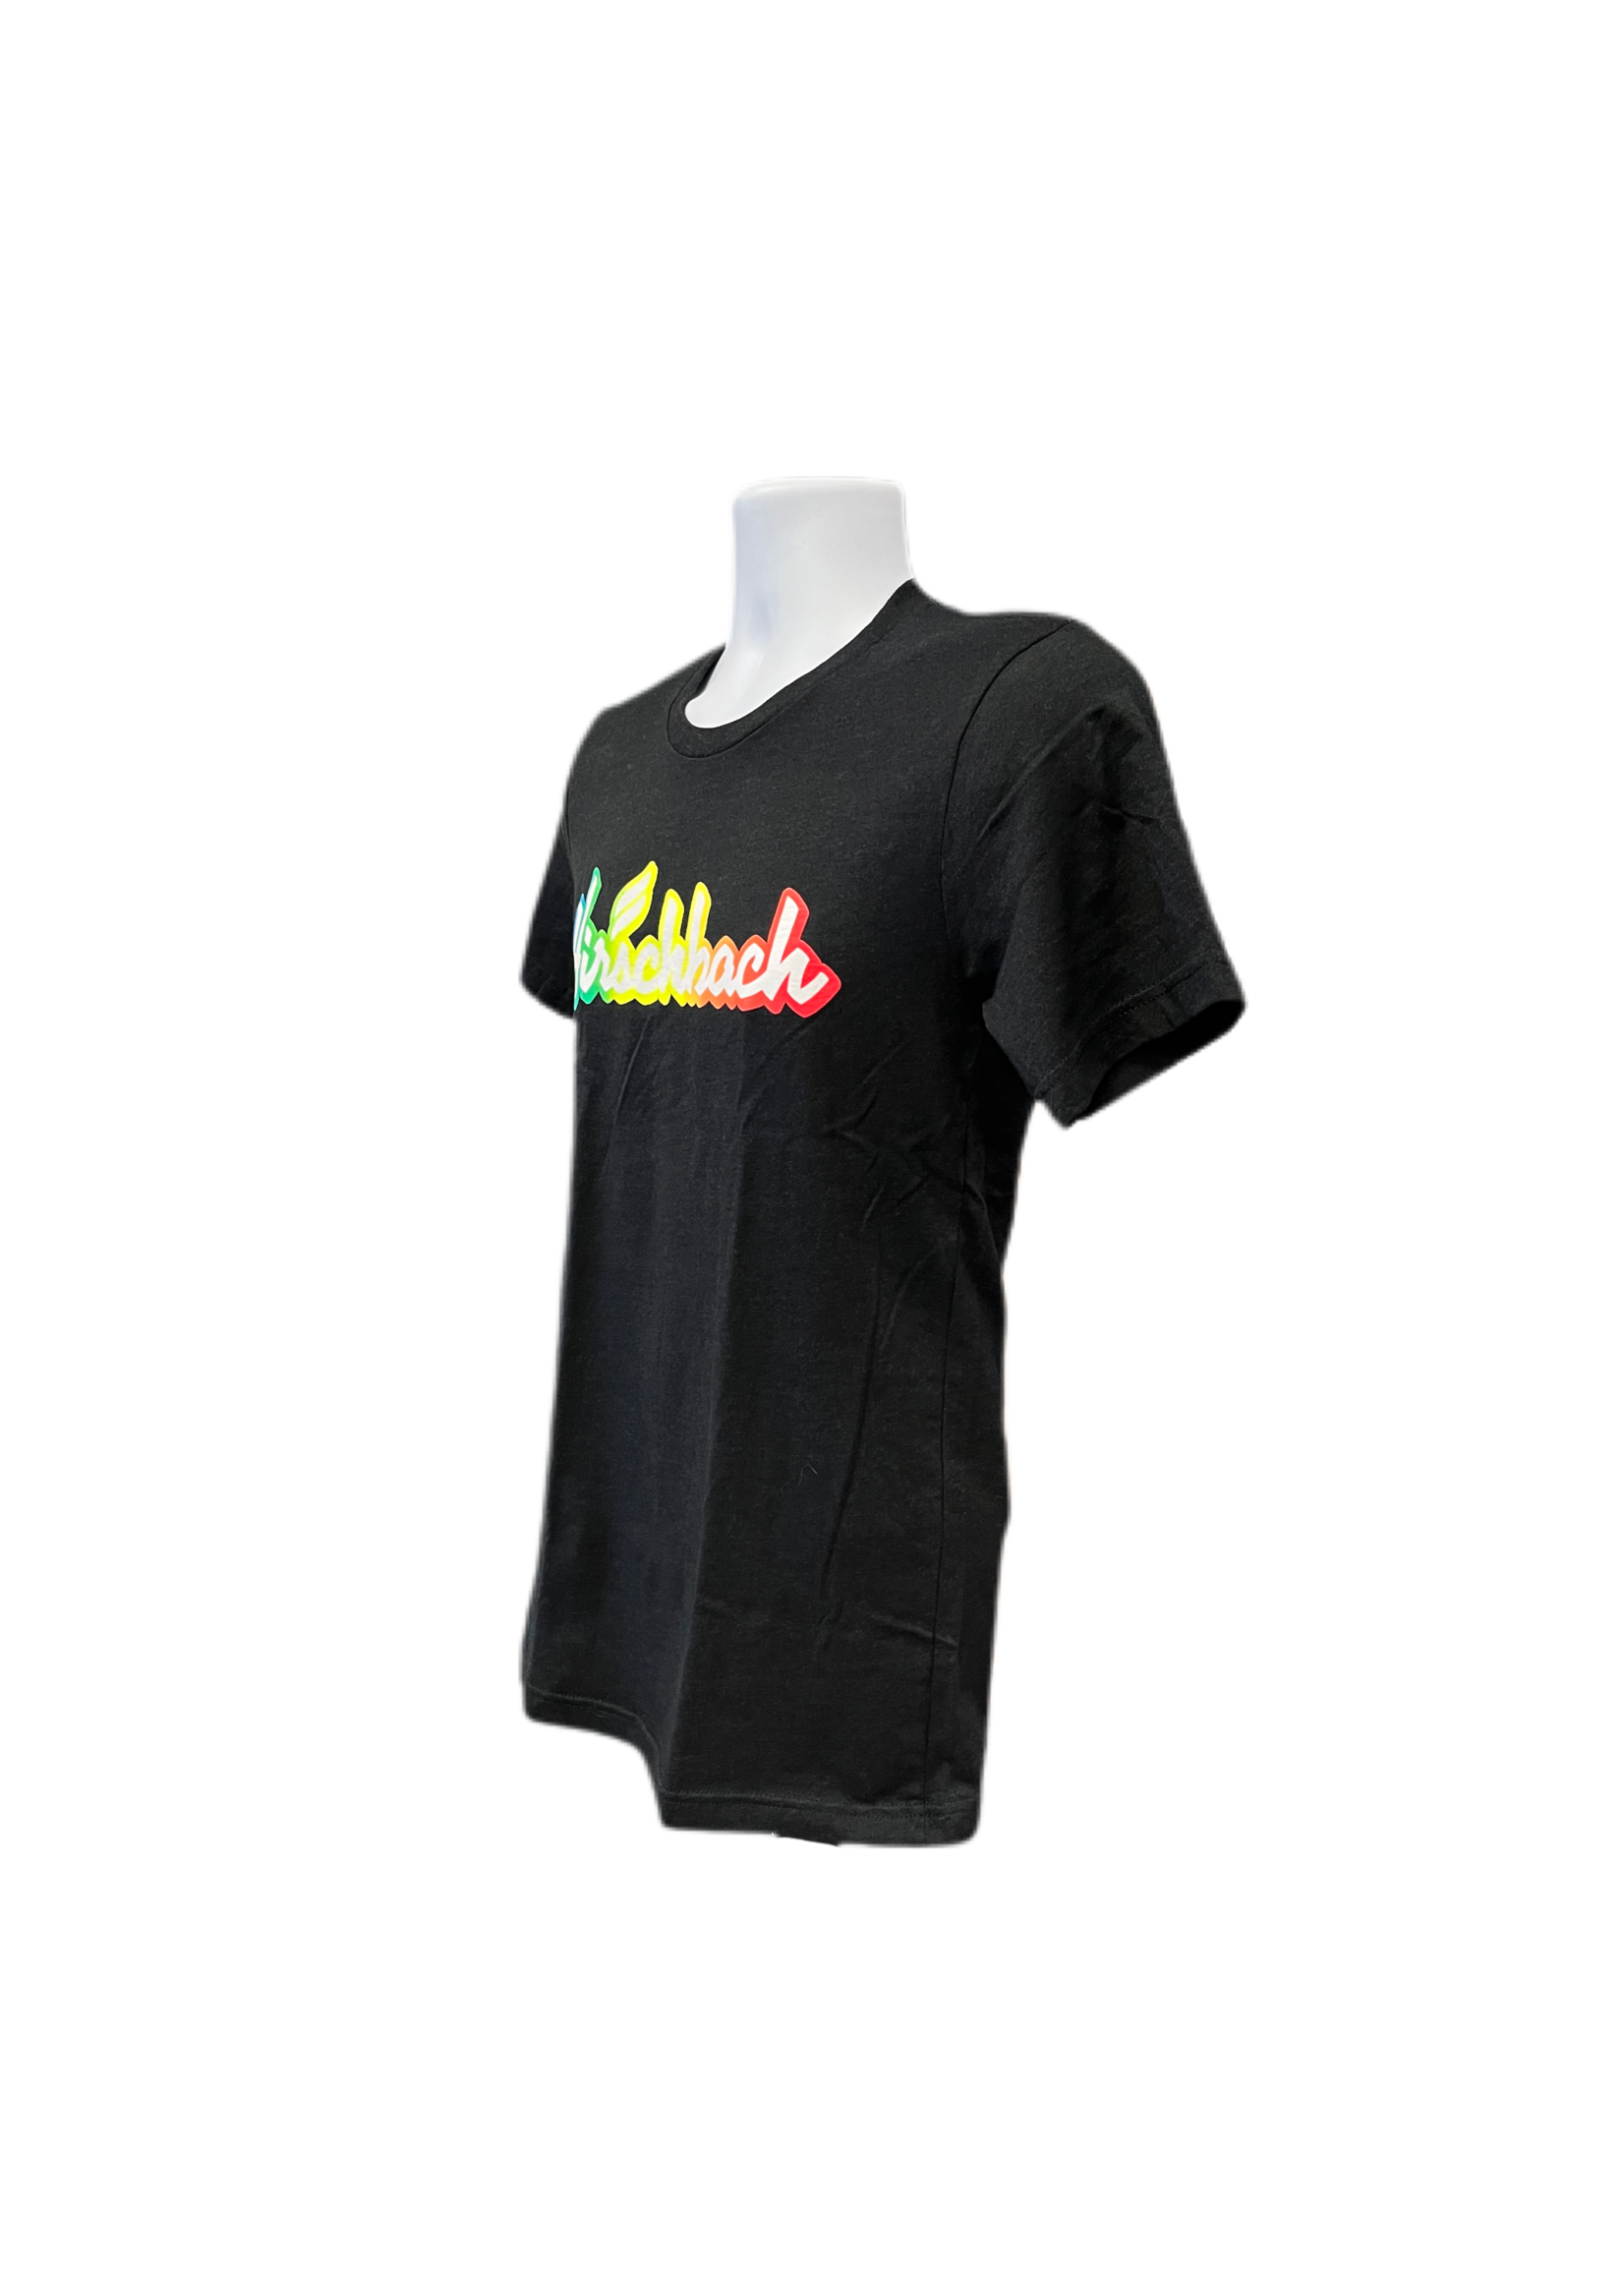 Rainbow Hirschbach Shirt